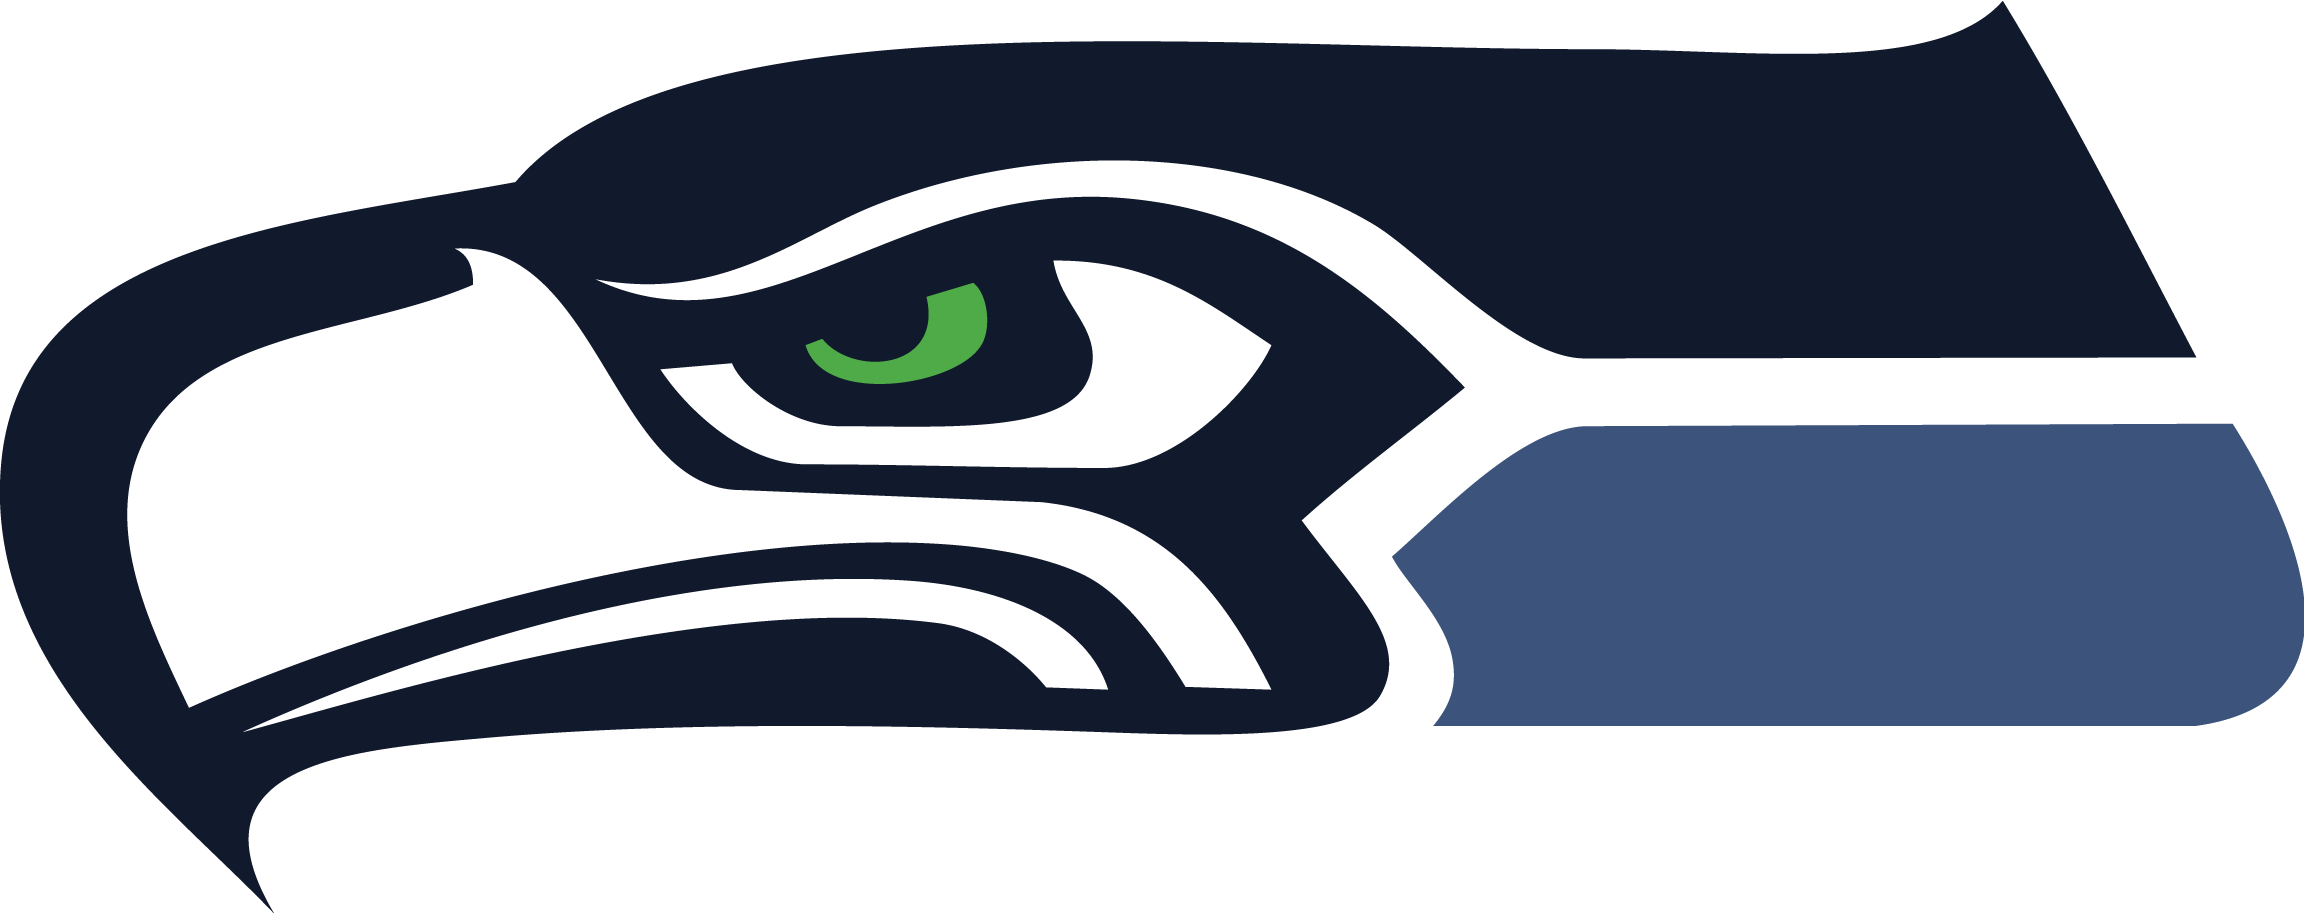 Seattle Seahawks Logo PNG HD Image